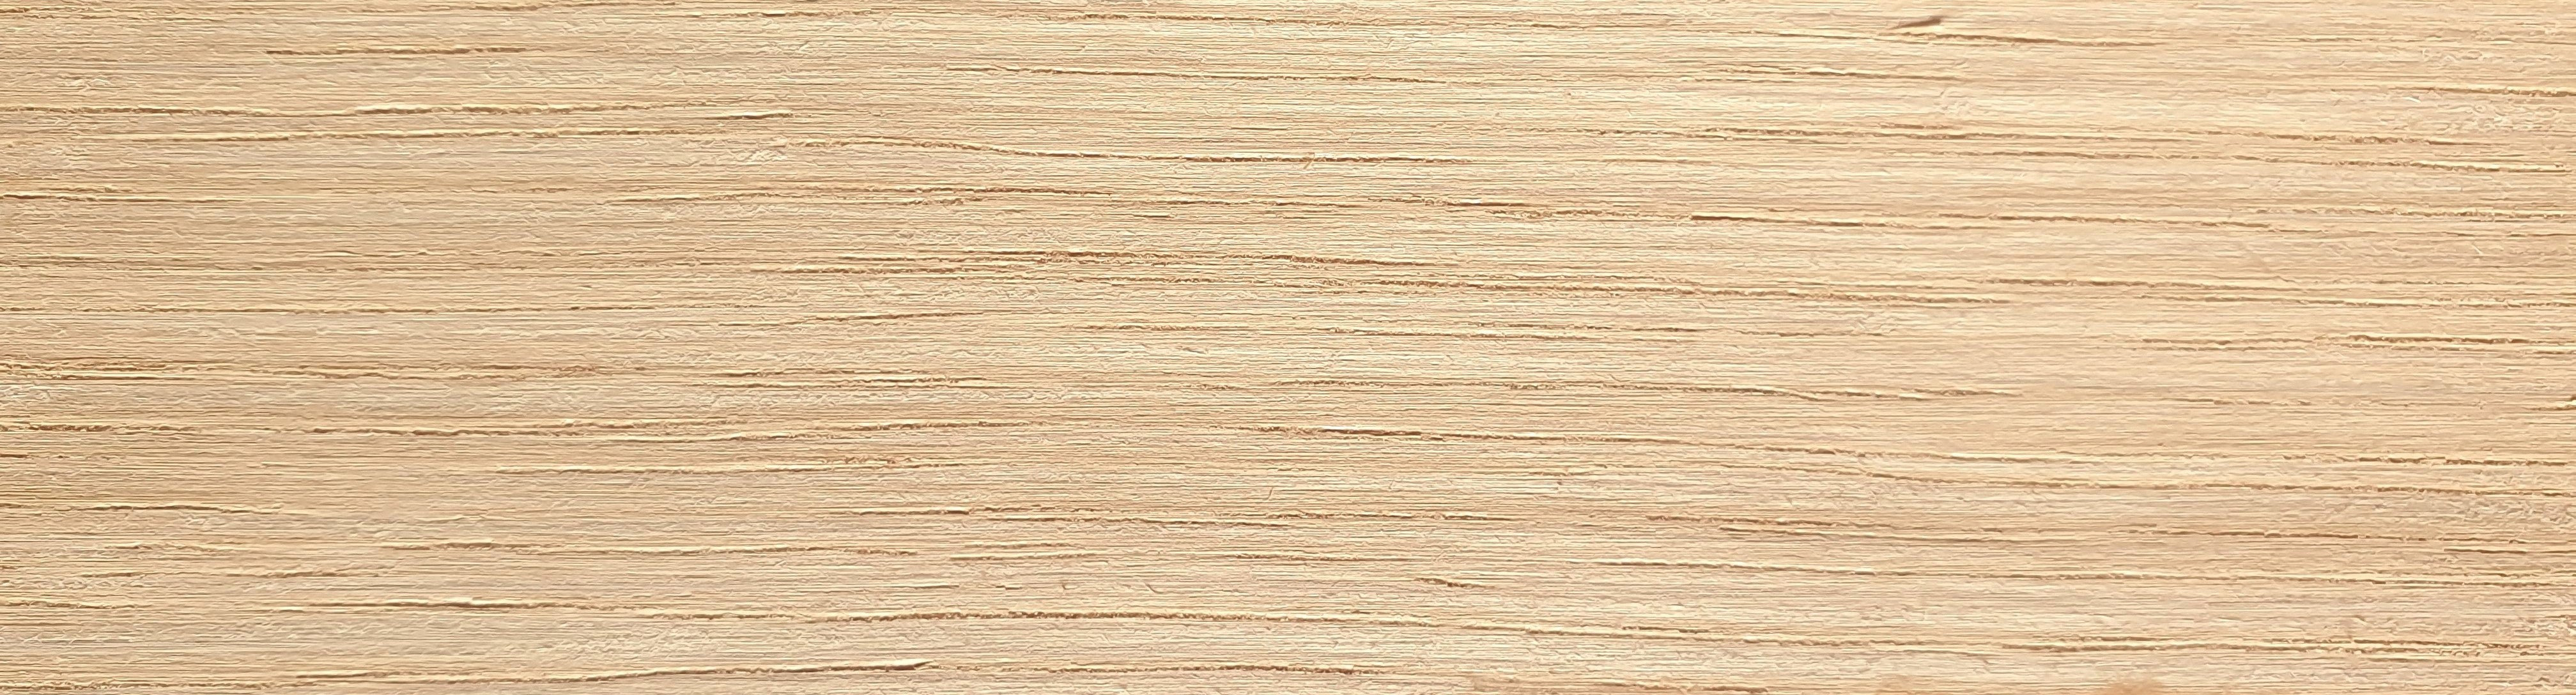 American White Oak Unglued Edging / Lipping 54mm x 2mm Thick Oak Wood Edging x 50 Metres